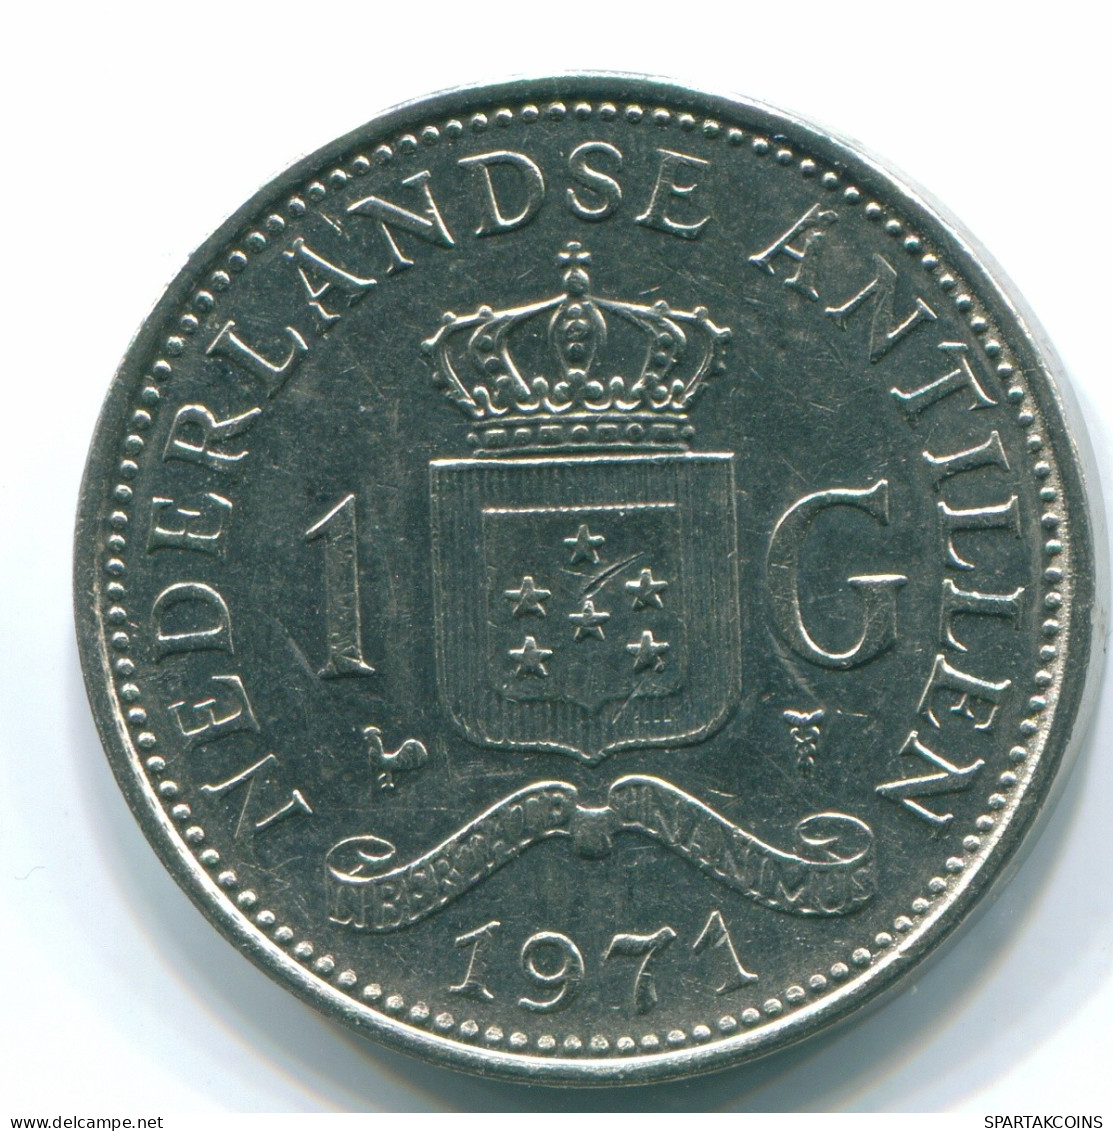 1 GULDEN 1971 NETHERLANDS ANTILLES Nickel Colonial Coin #S11984.U.A - Nederlandse Antillen